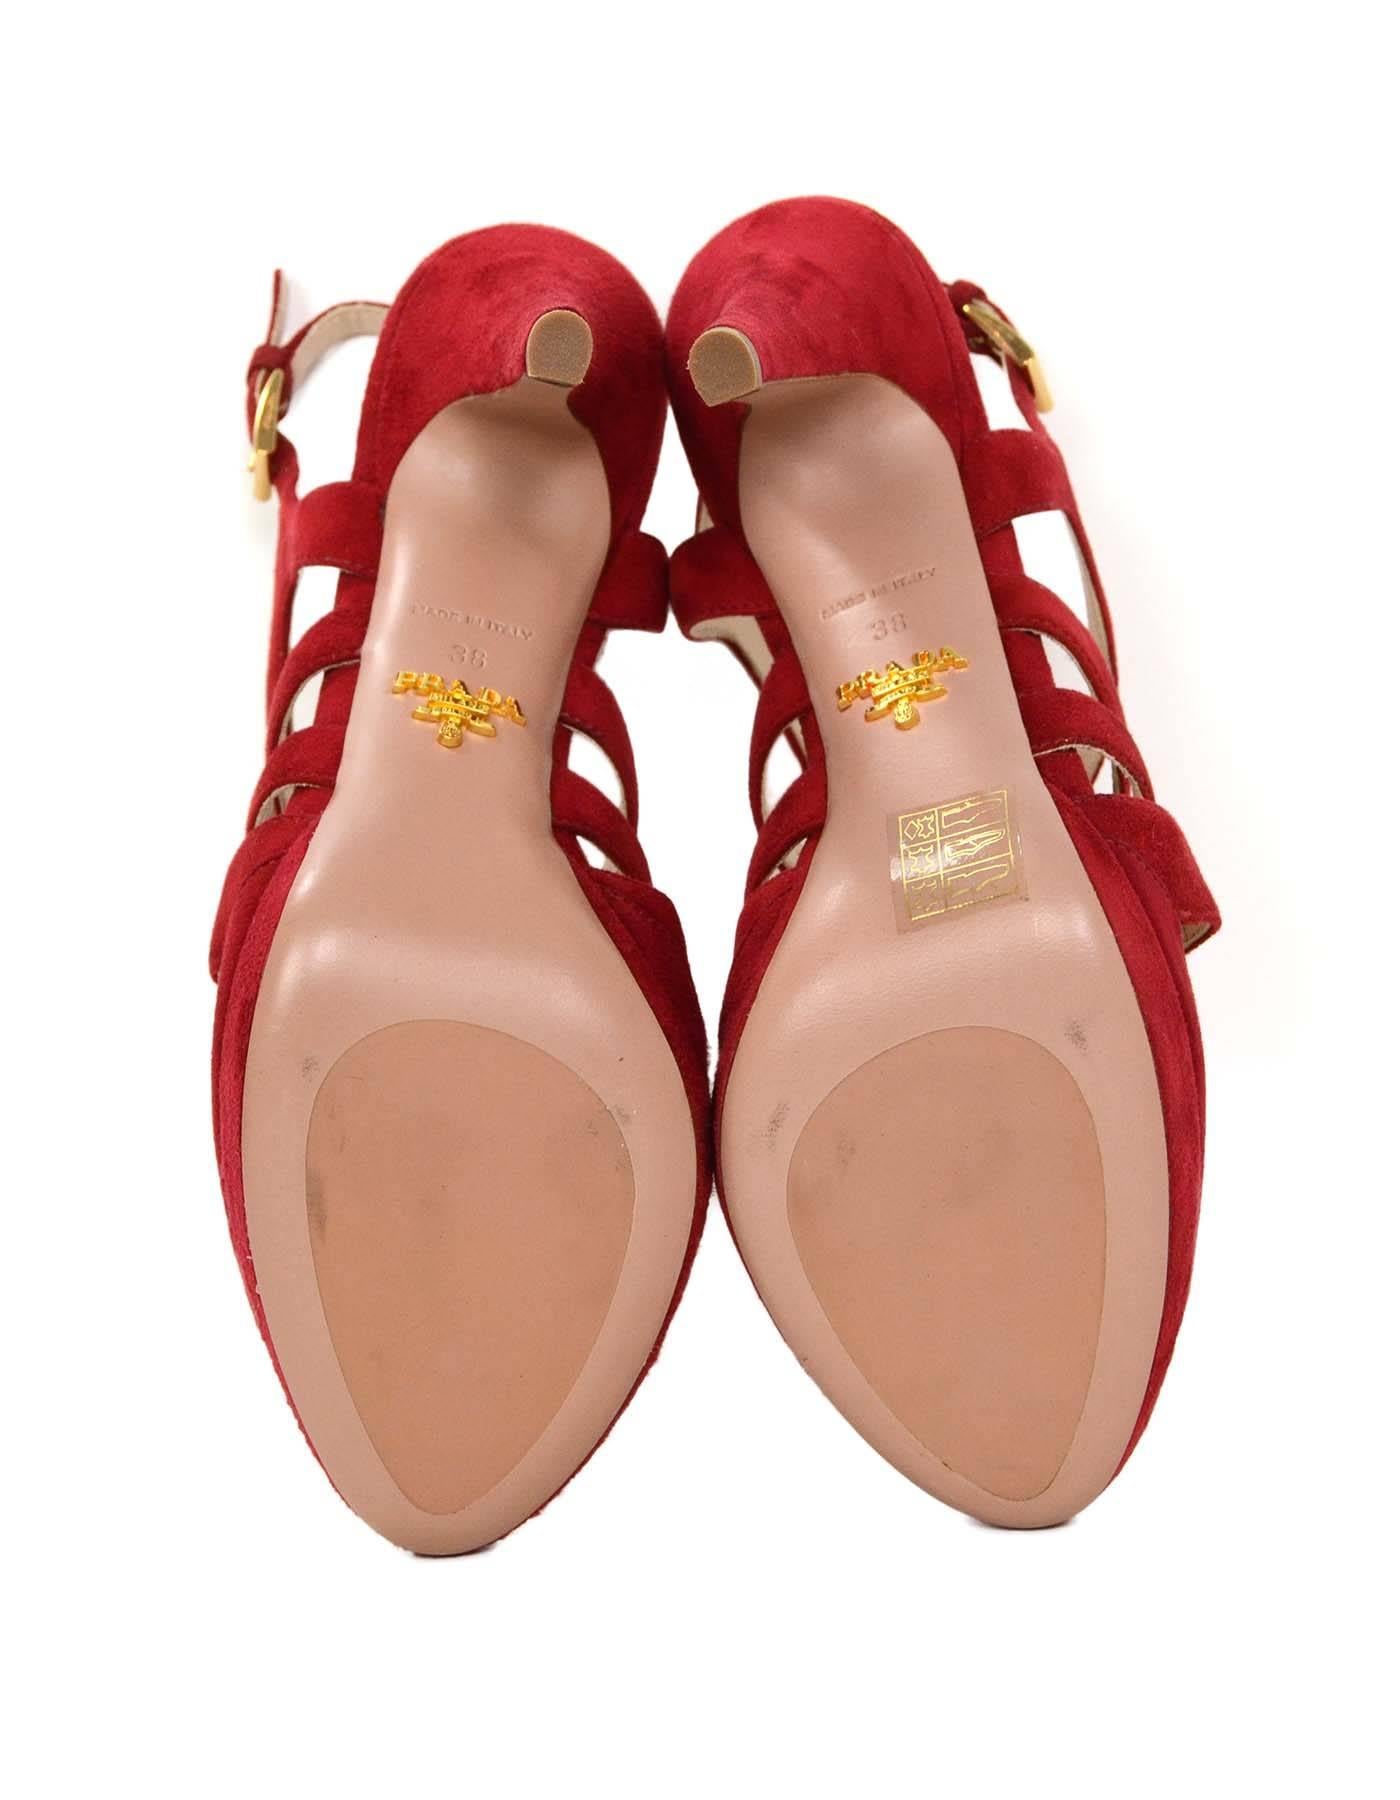 Prada Red Suede Strappy Sandals sz 38 3